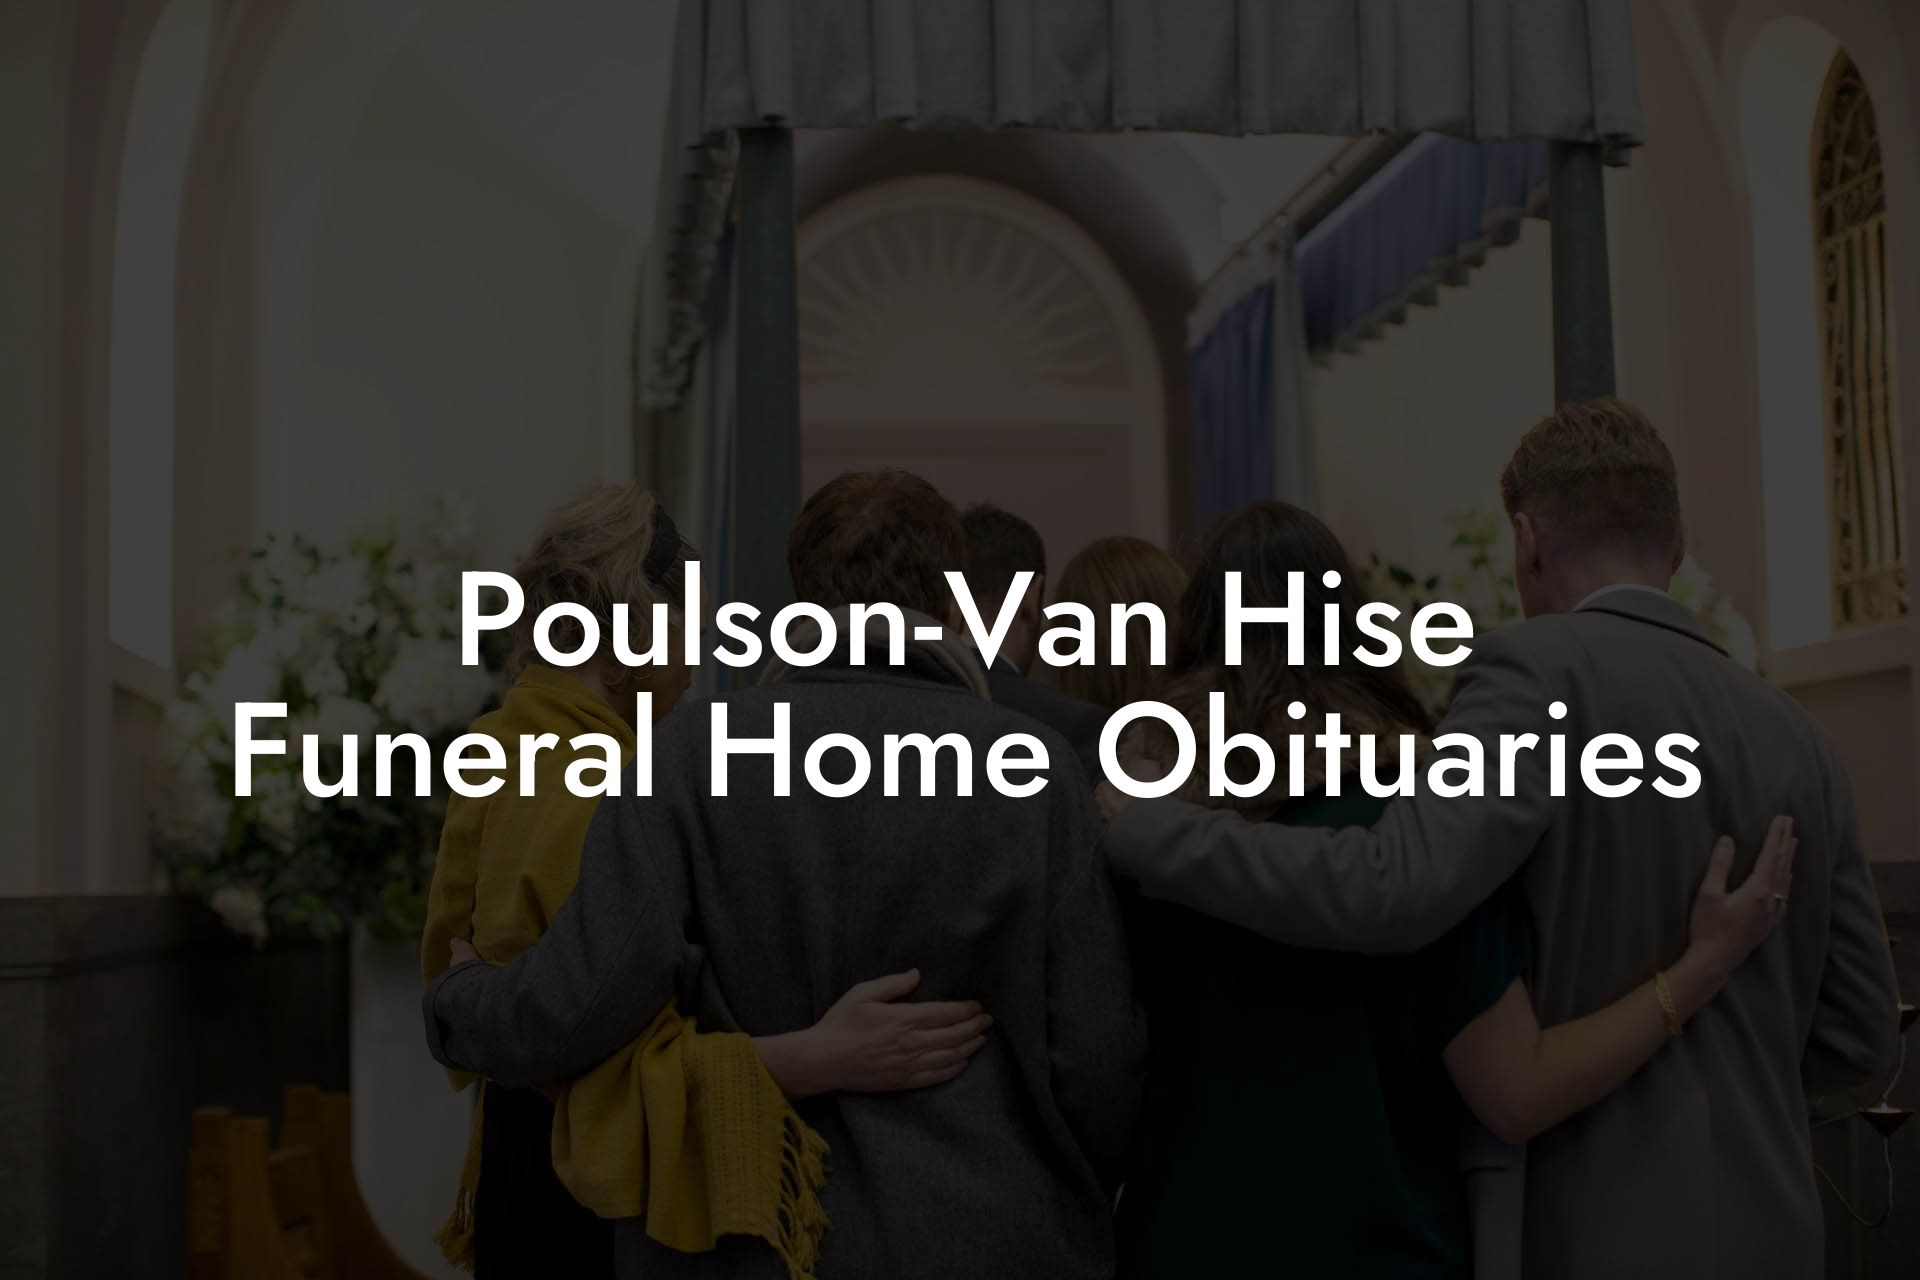 Poulson-Van Hise Funeral Home Obituaries